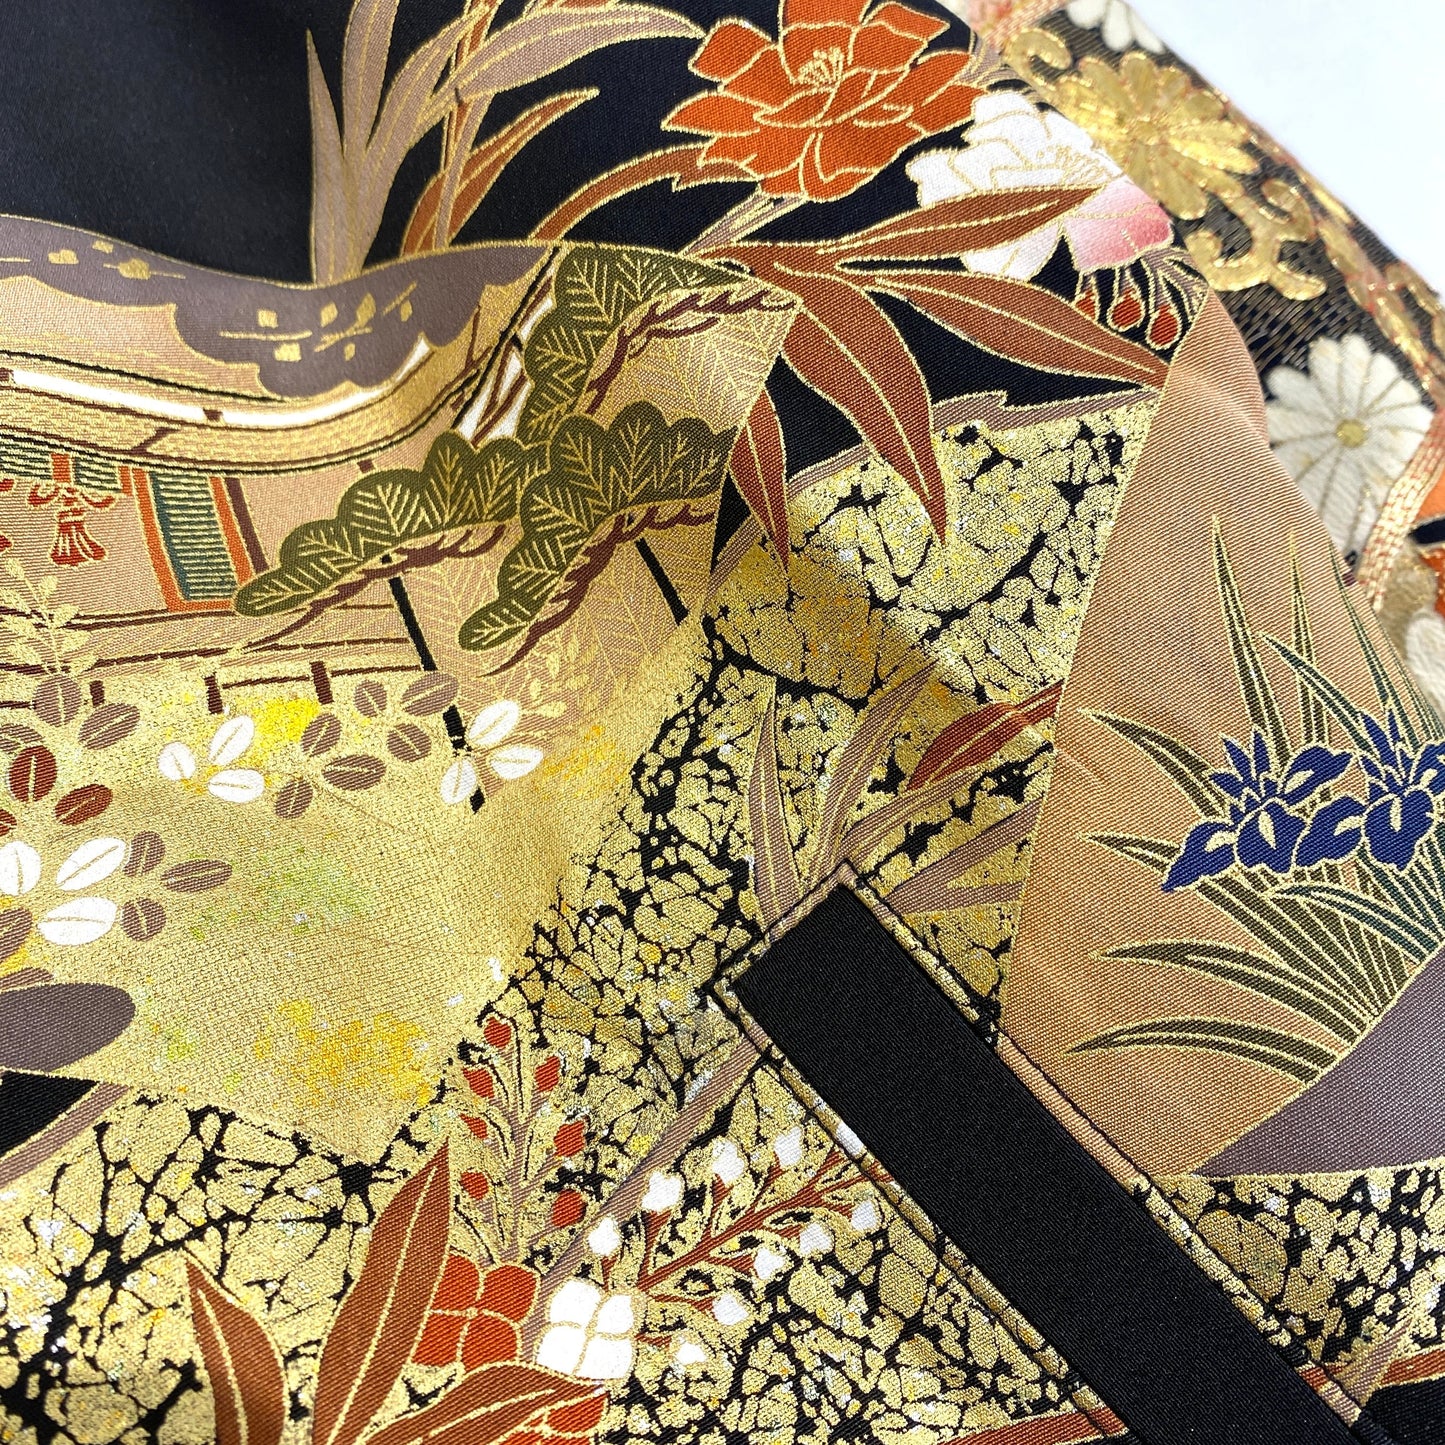 Bespoke Hypebeast Japanese Remake Vintage Handmade Custom One and Only One Cote Mer Wagara Upcycle Sustainable Street Fashion Embroidered Embroidery Kimono Obi Boro x Leather Riders Blouson Jacket ( Size : XL )